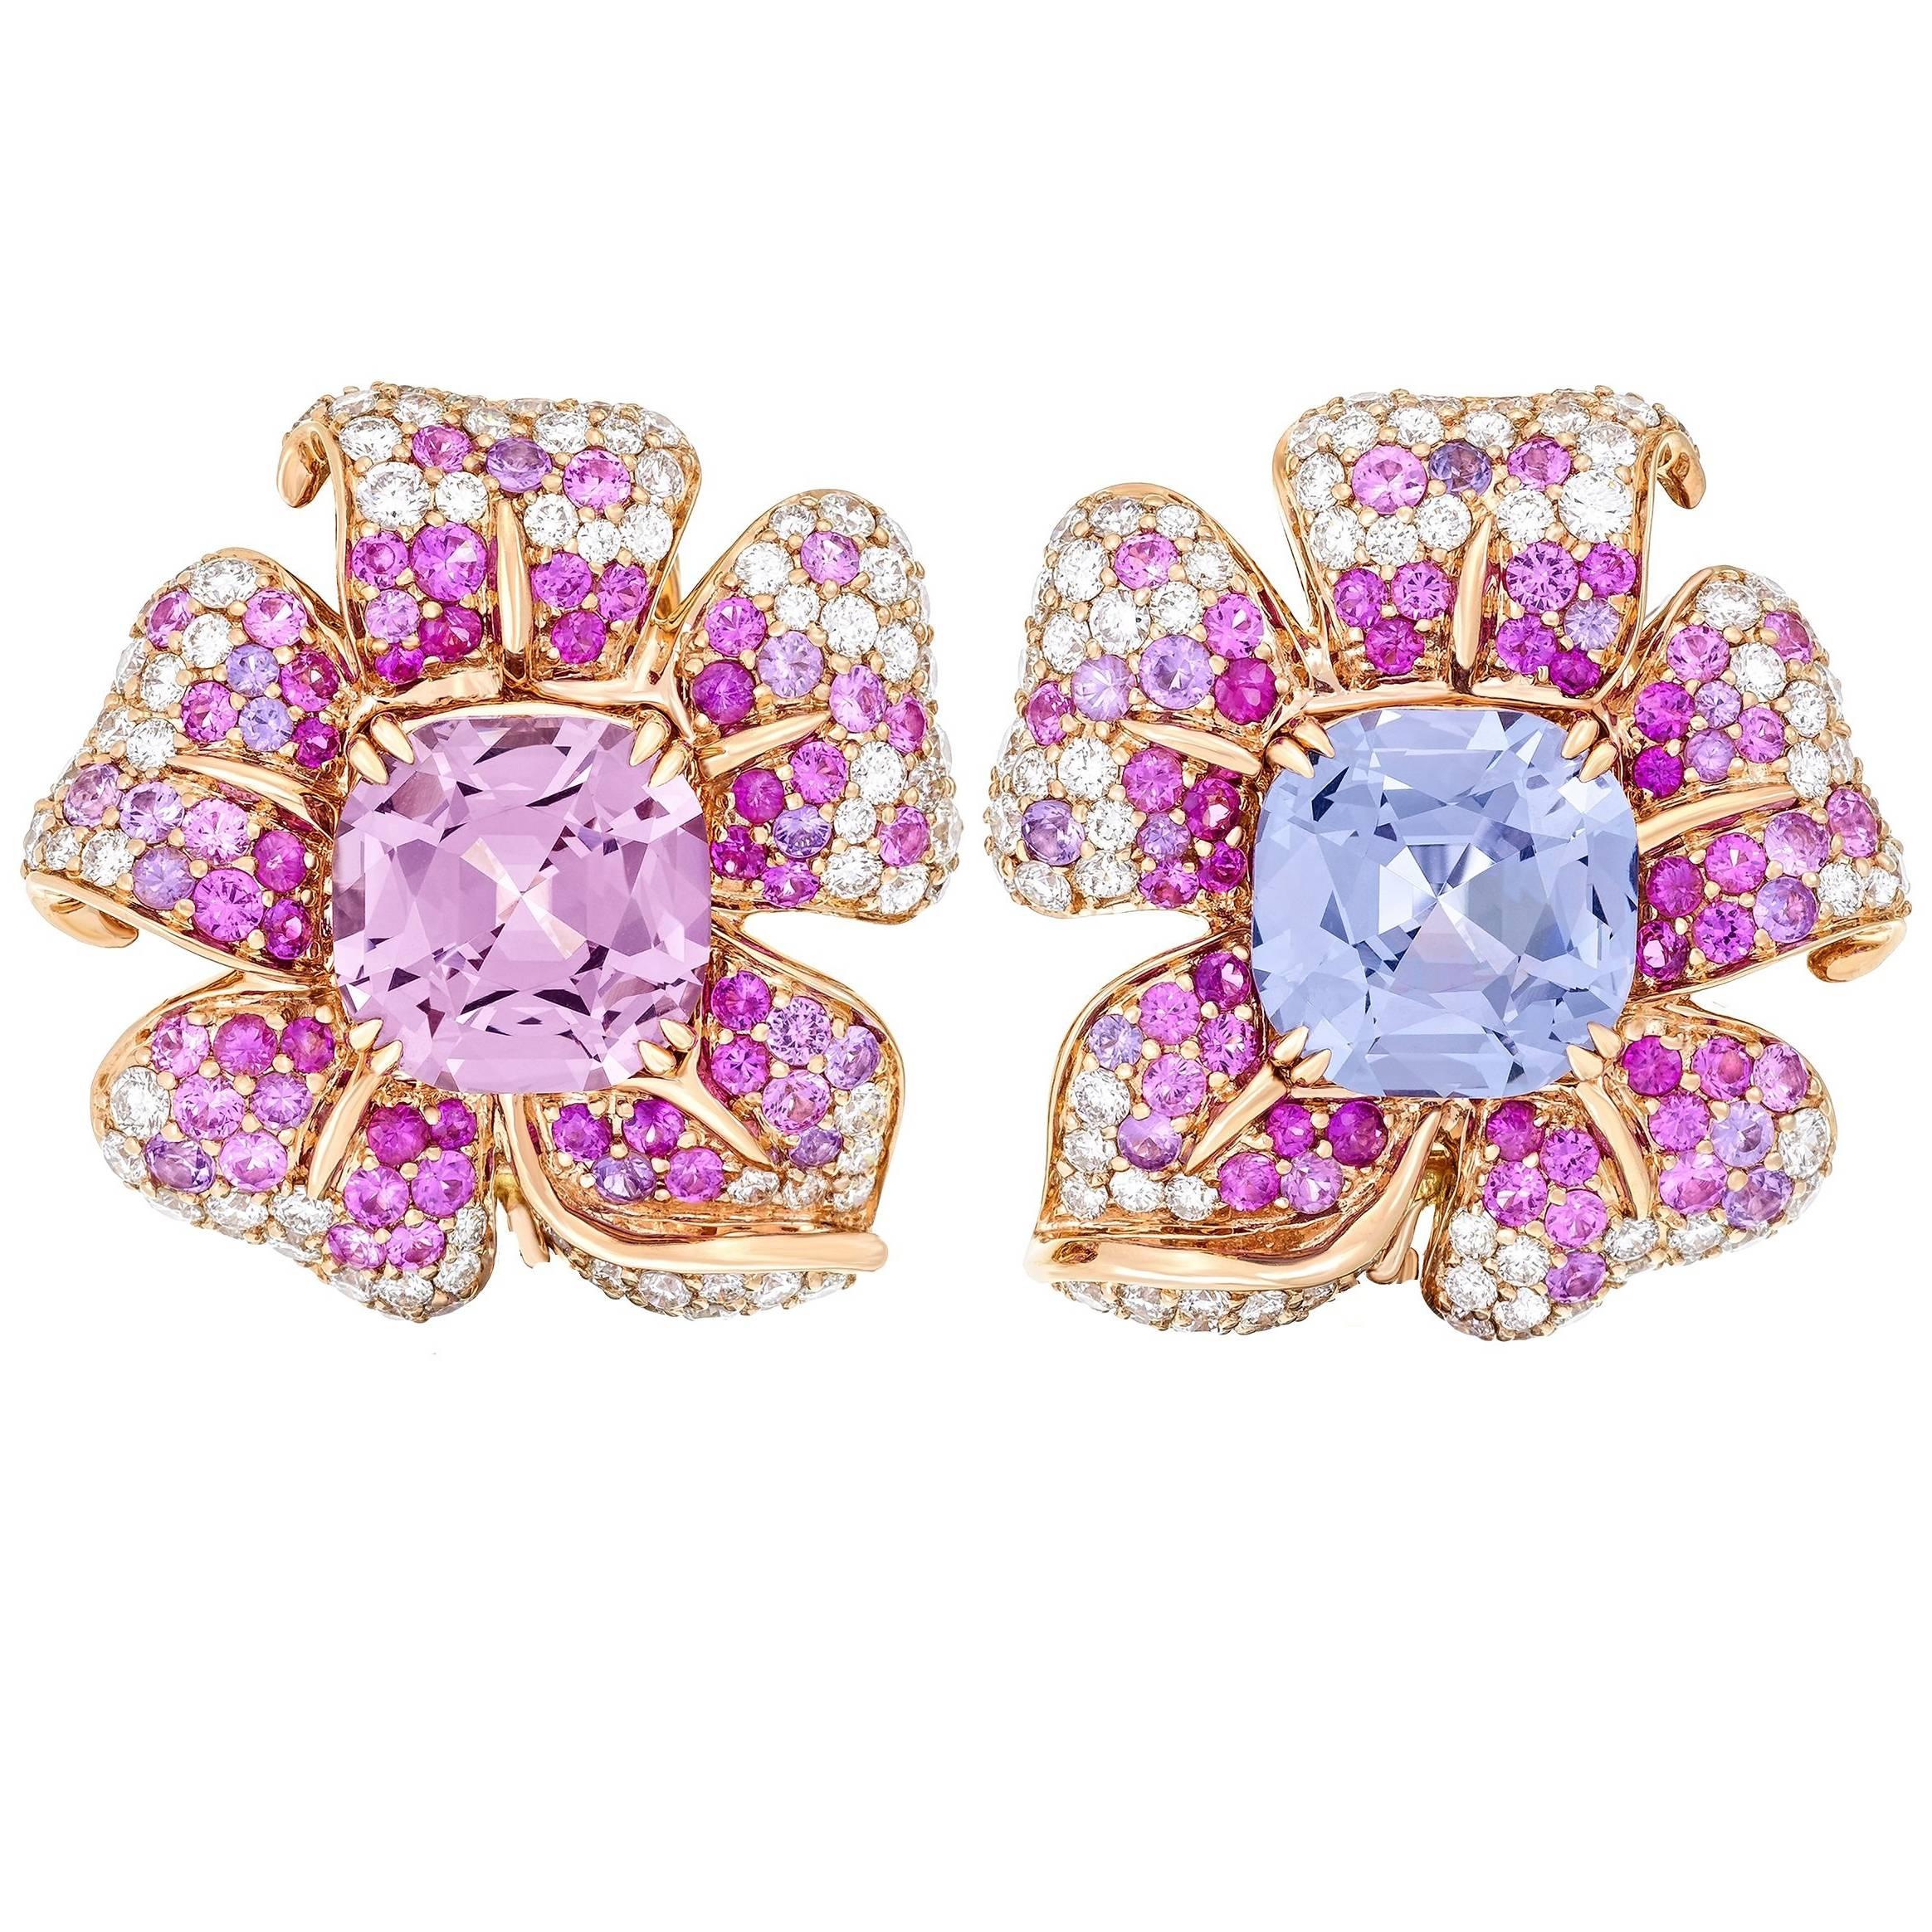 Margot McKinney Stunning 10.19 Carat Spinel Pink Purple Sapphire Flower Earrings For Sale